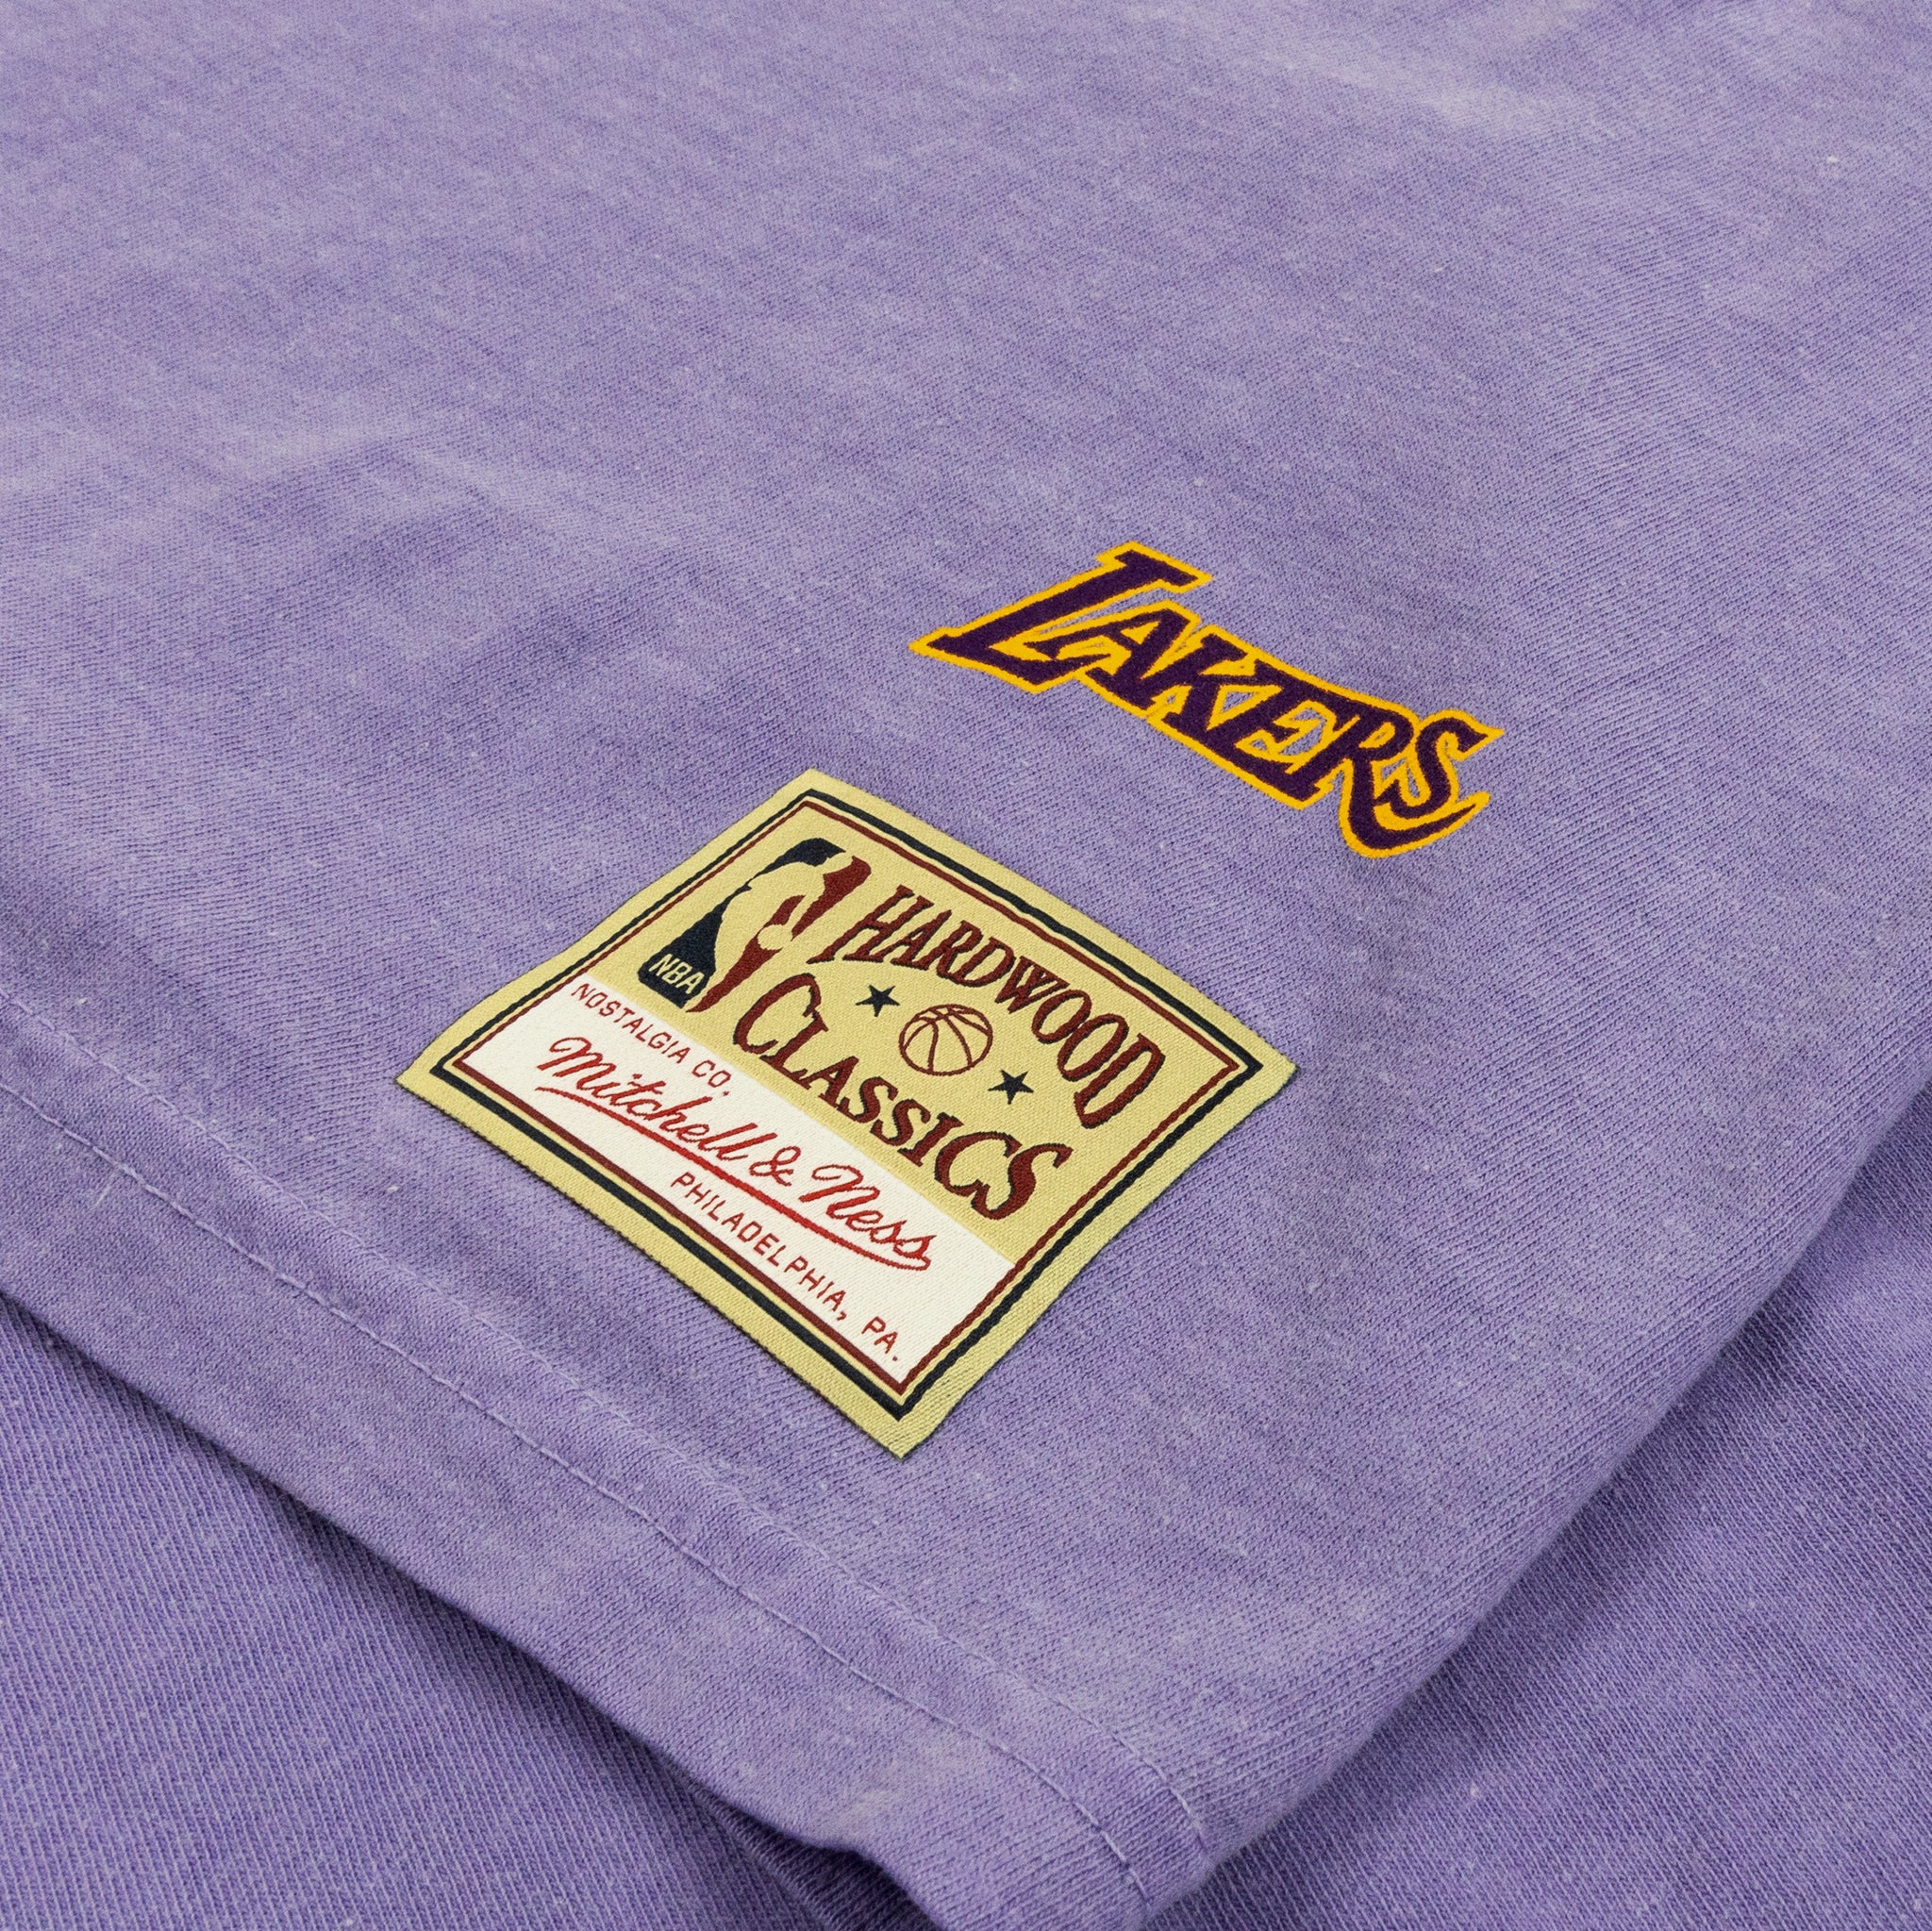 Men's Los Angeles Lakers Mitchell & Ness Black/Purple Side Core